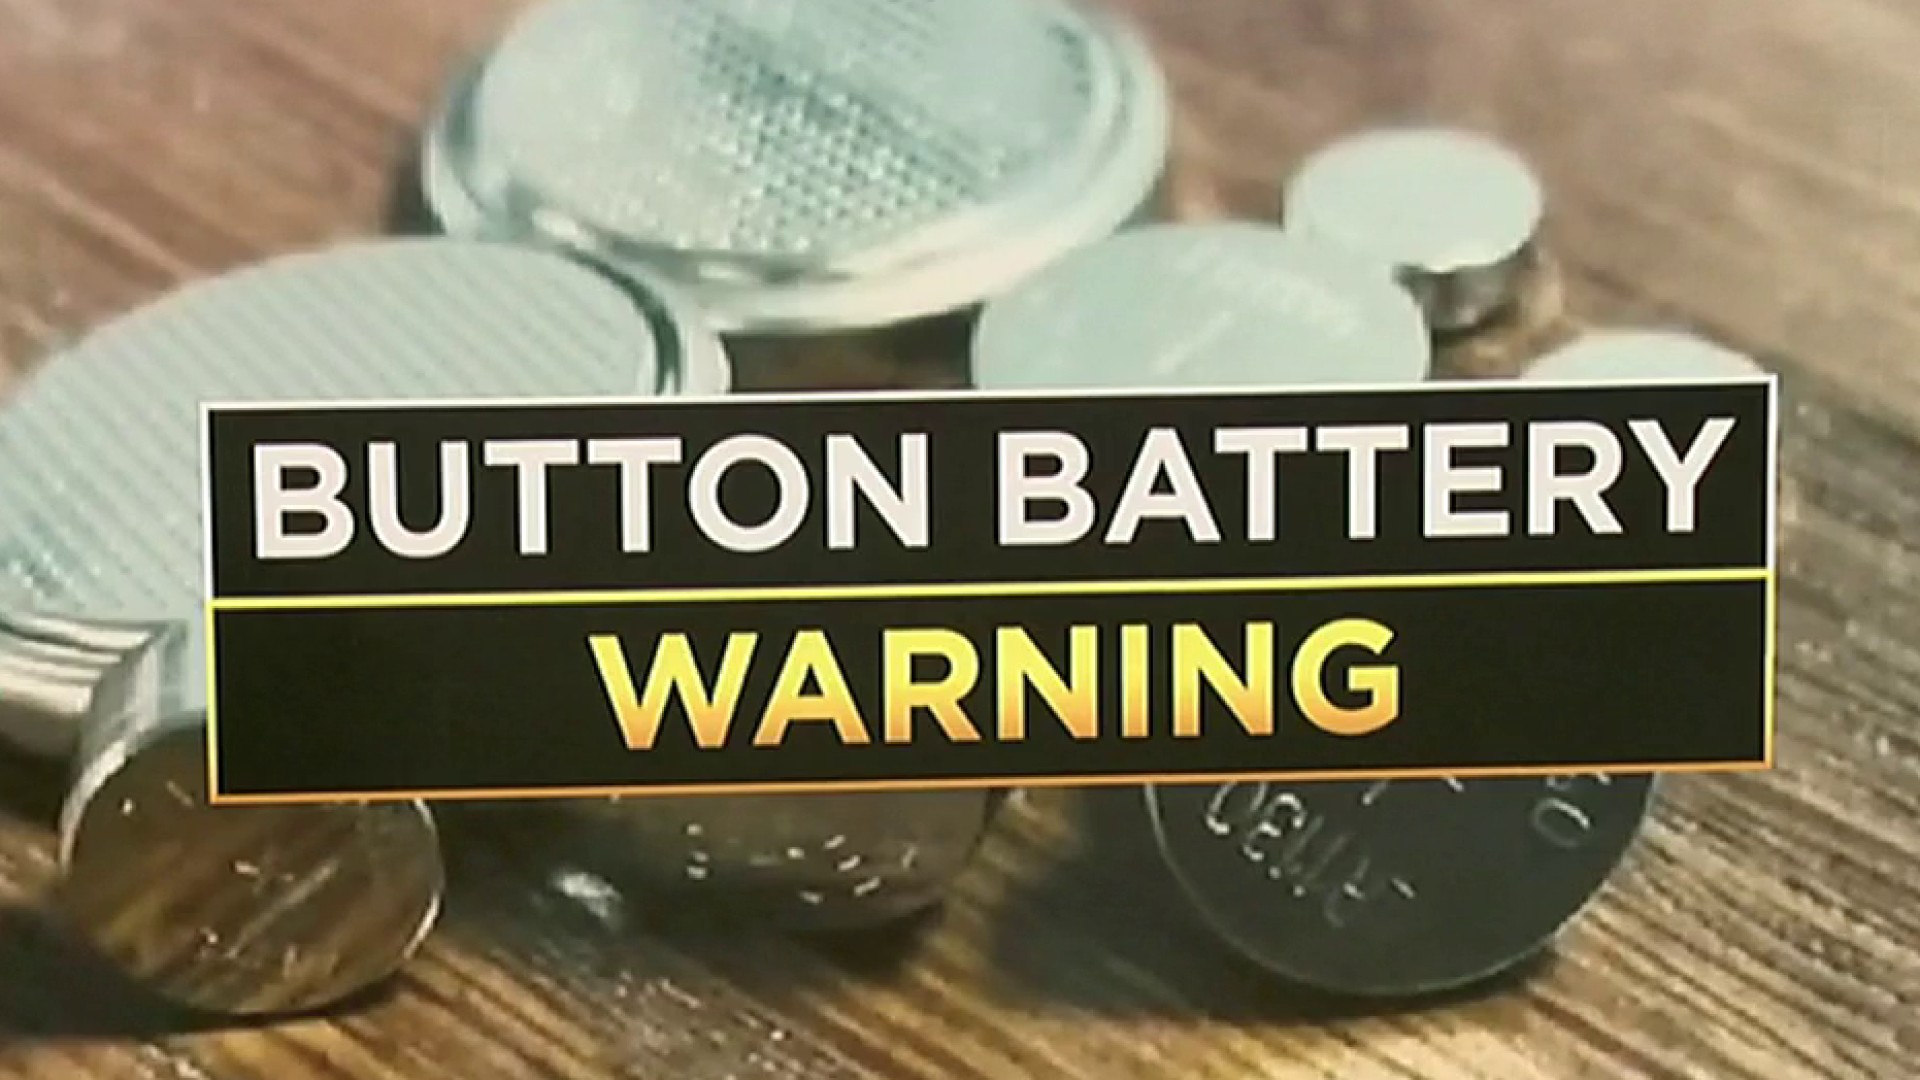 Button battery warning